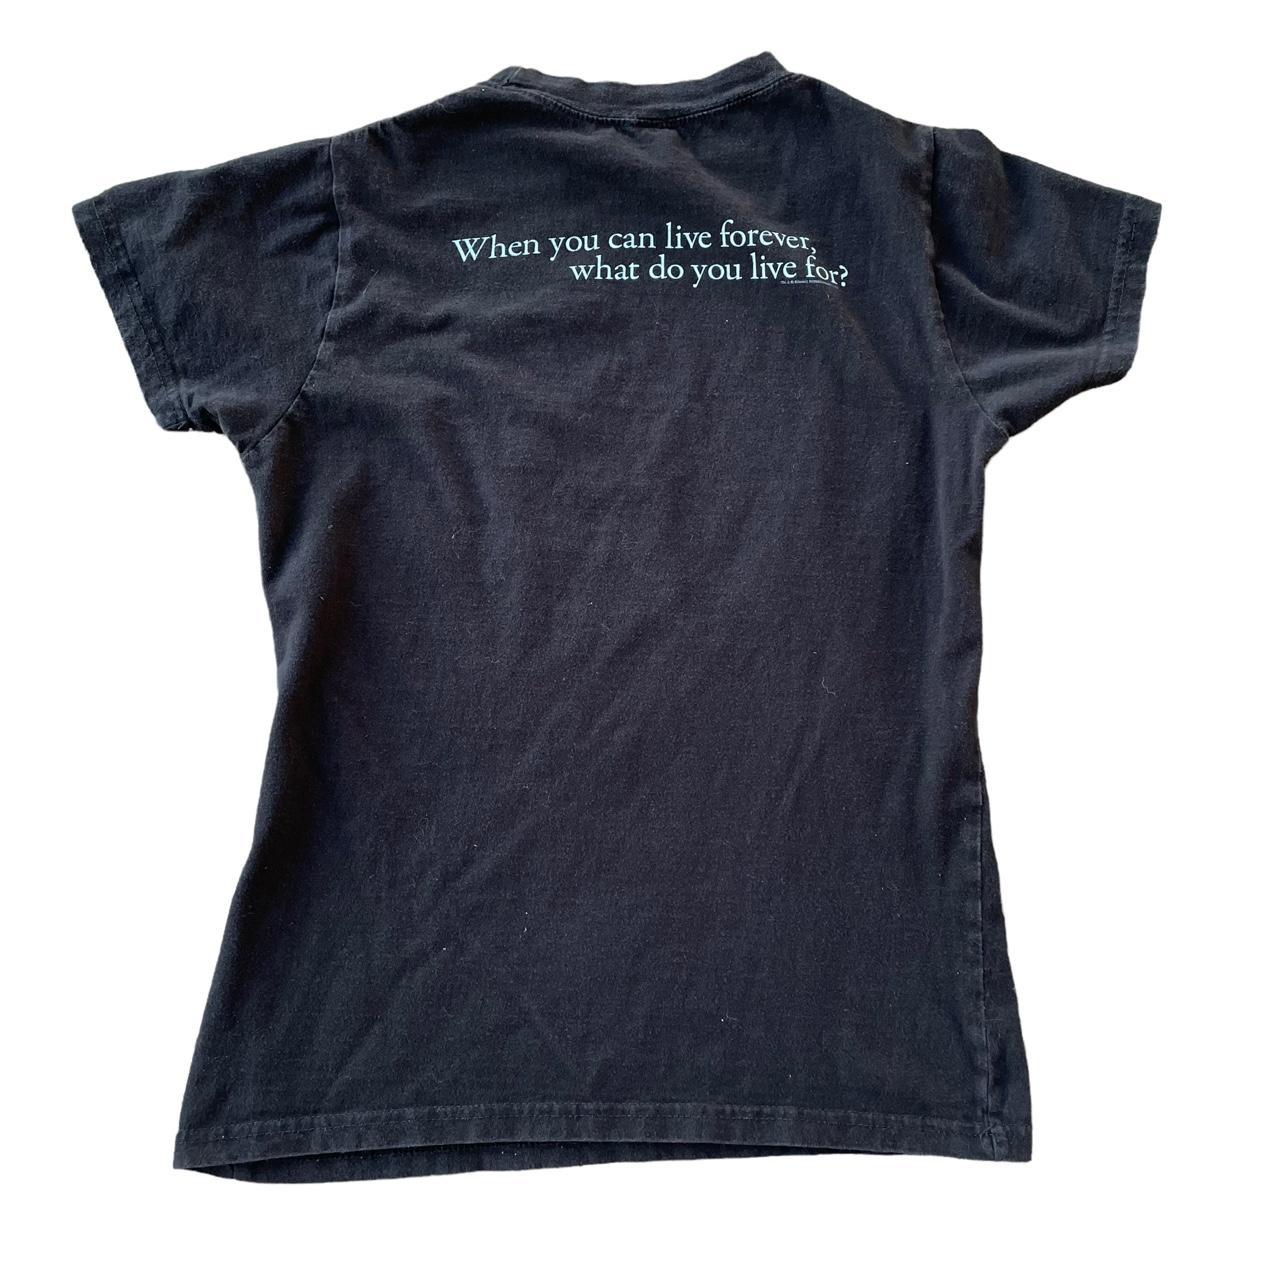 Product Image 4 - Twilight Merch T-Shirt

Iconic twilight bella